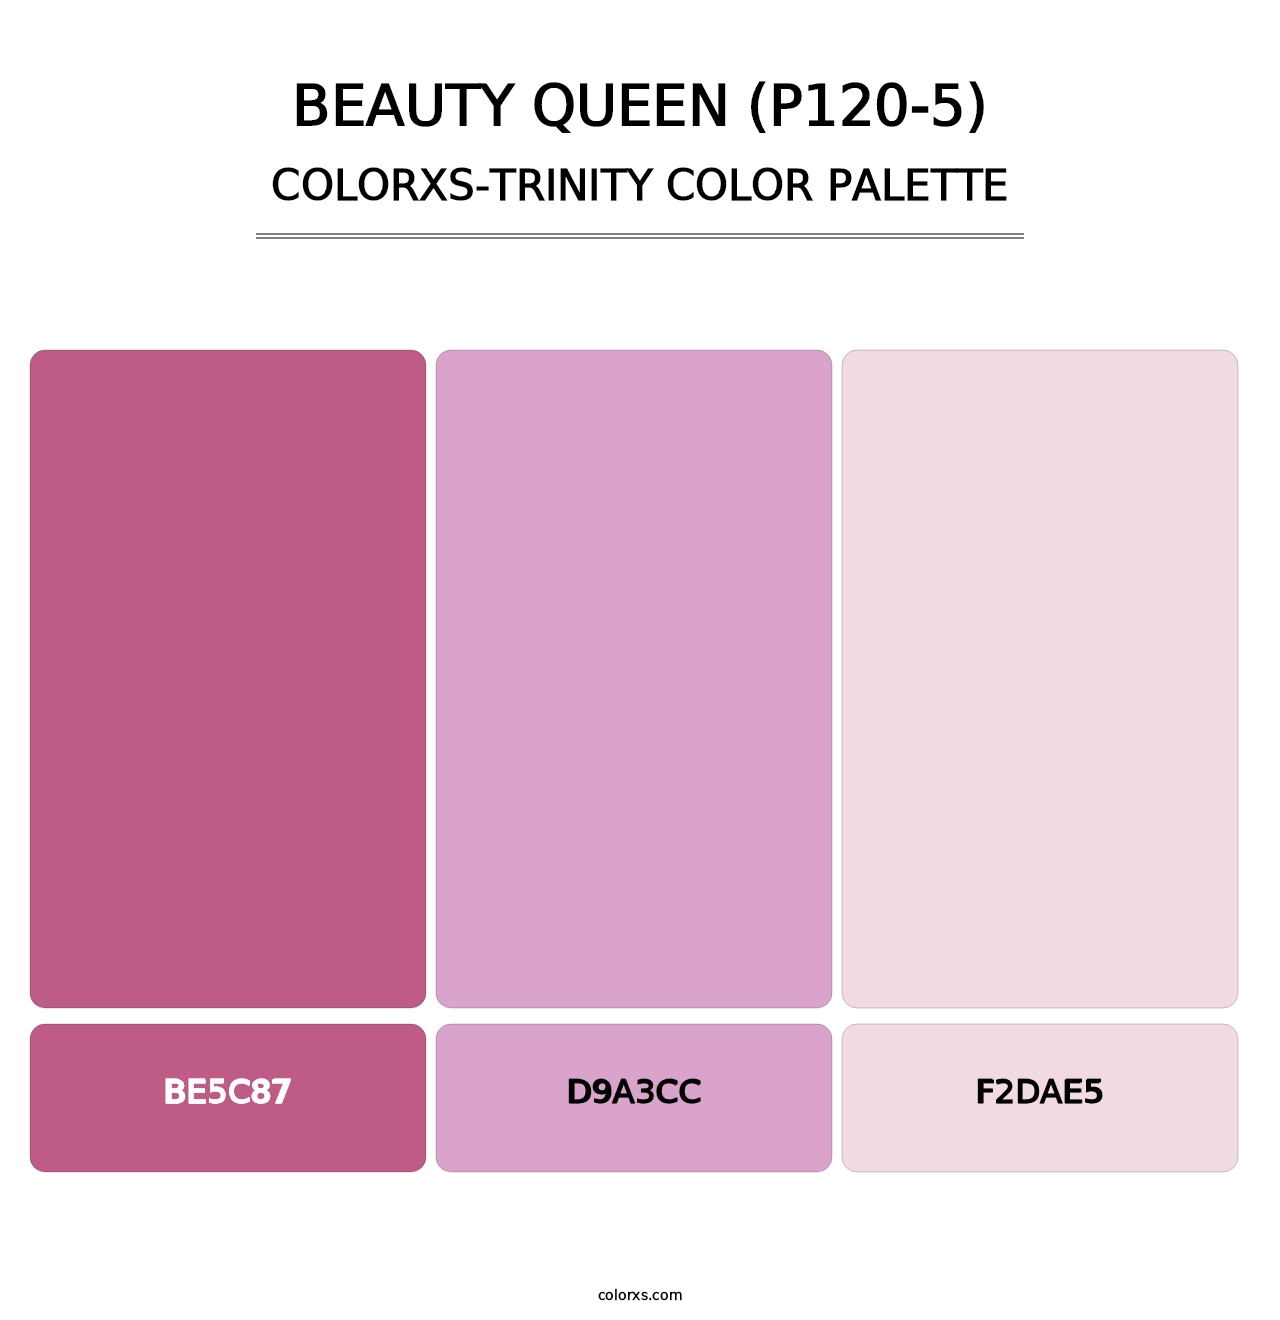 Beauty Queen (P120-5) - Colorxs Trinity Palette